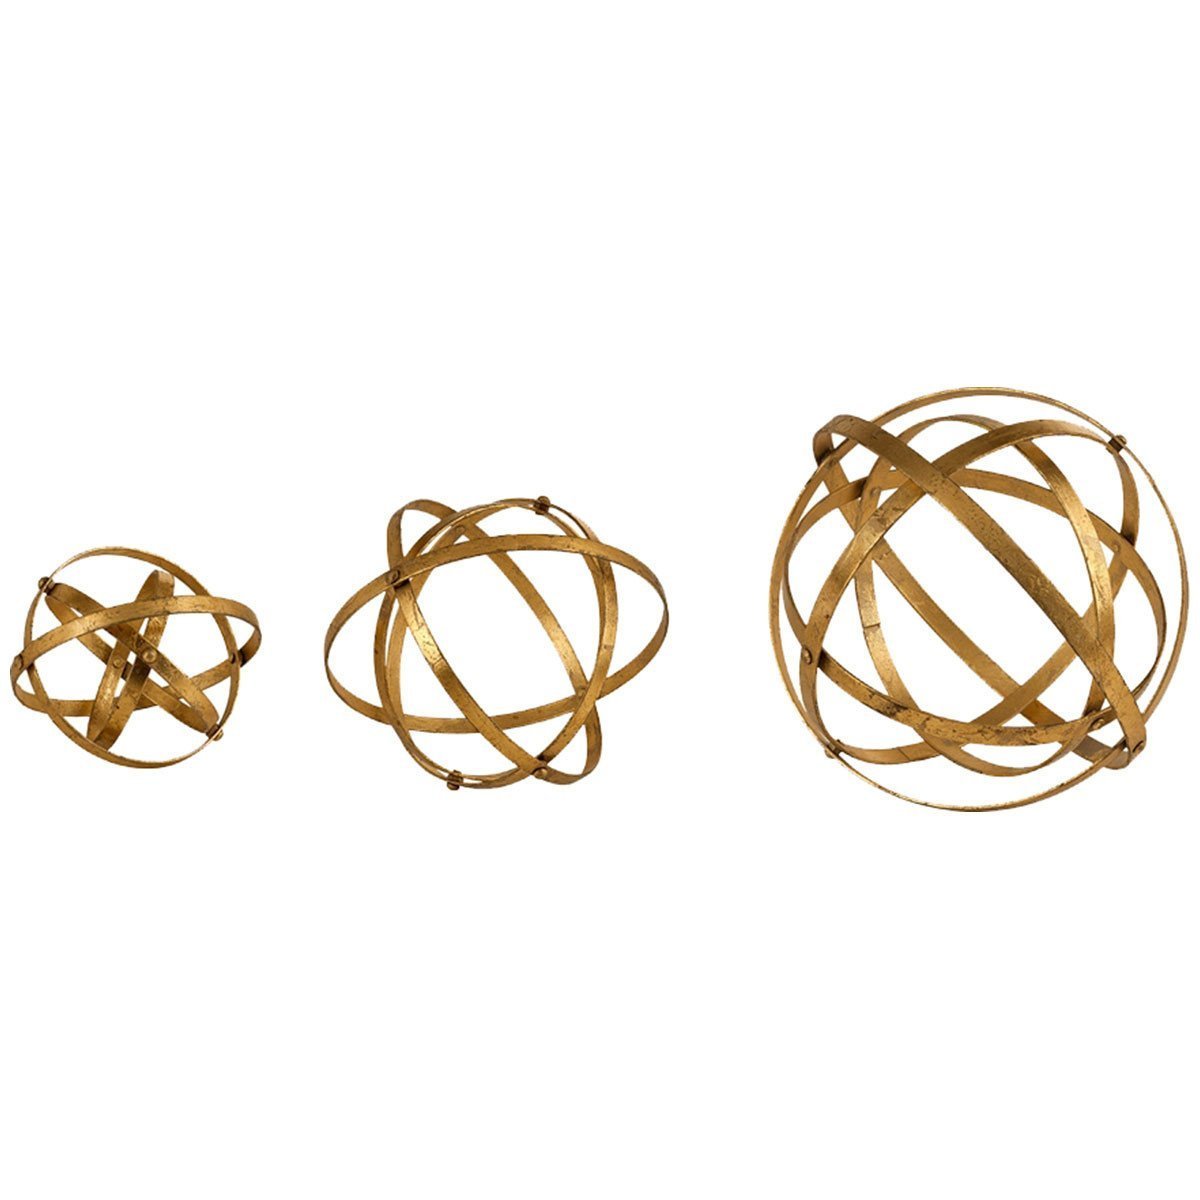 Uttermost Stetson Gold Spheres, 3-Piece Set